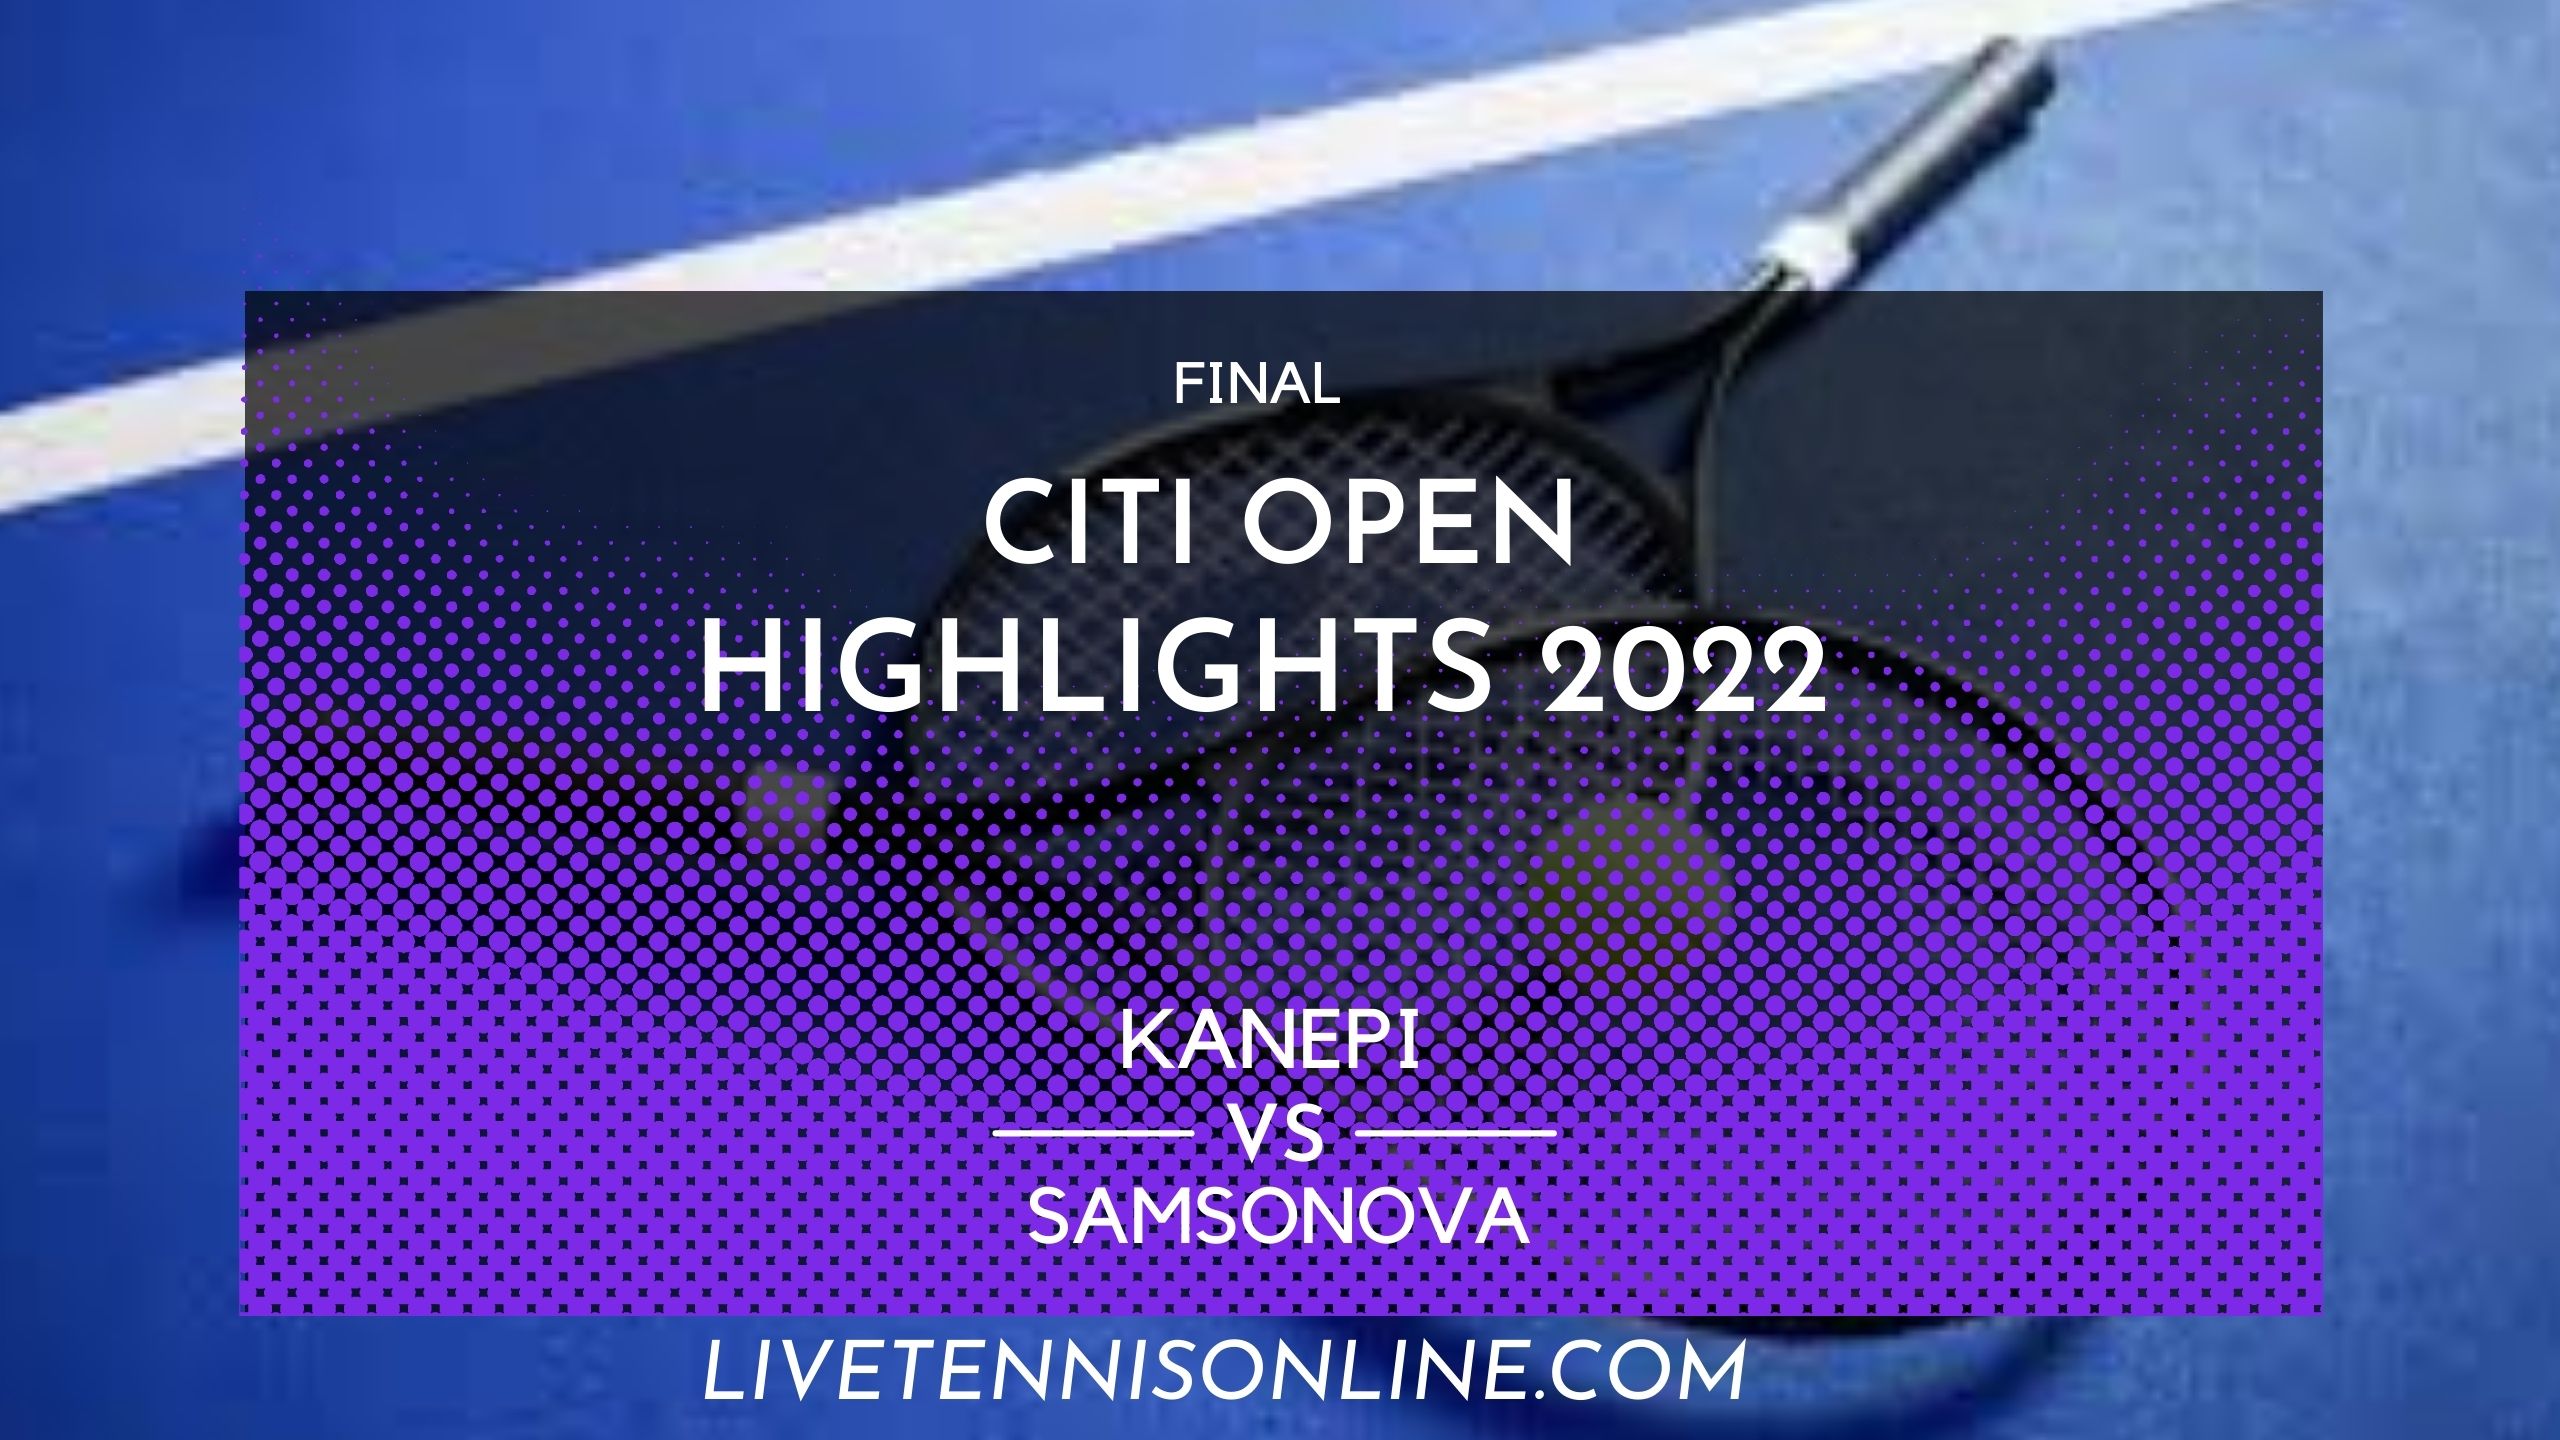 Kanepi Vs Samsonova Final Highlights 2022 Citi Open